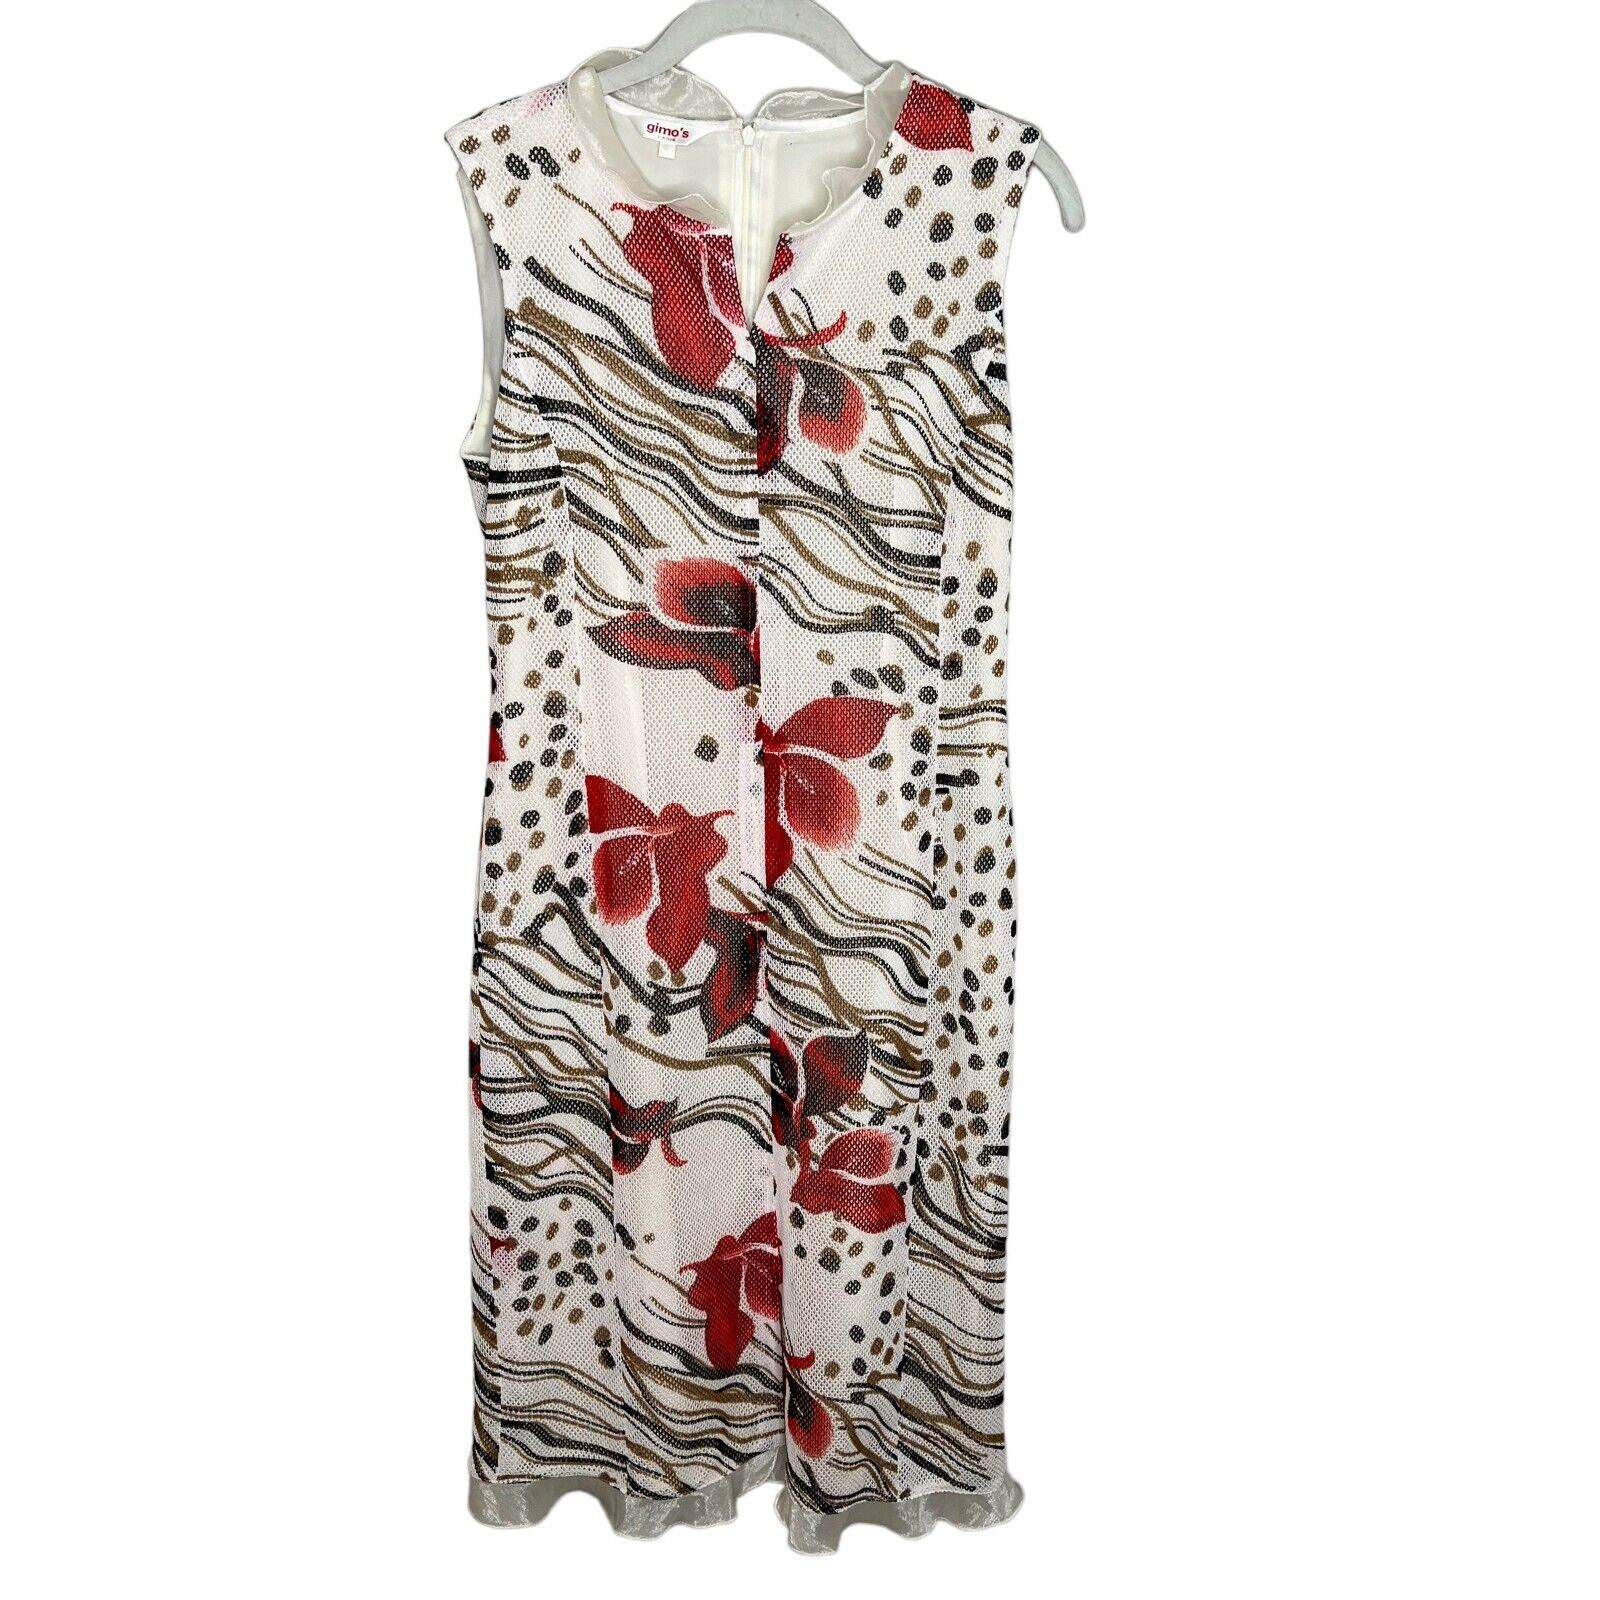 gimo's Paris Ivory Floral Mesh Sheath Dress Ruffle Collar & Hem Size Medium (9)